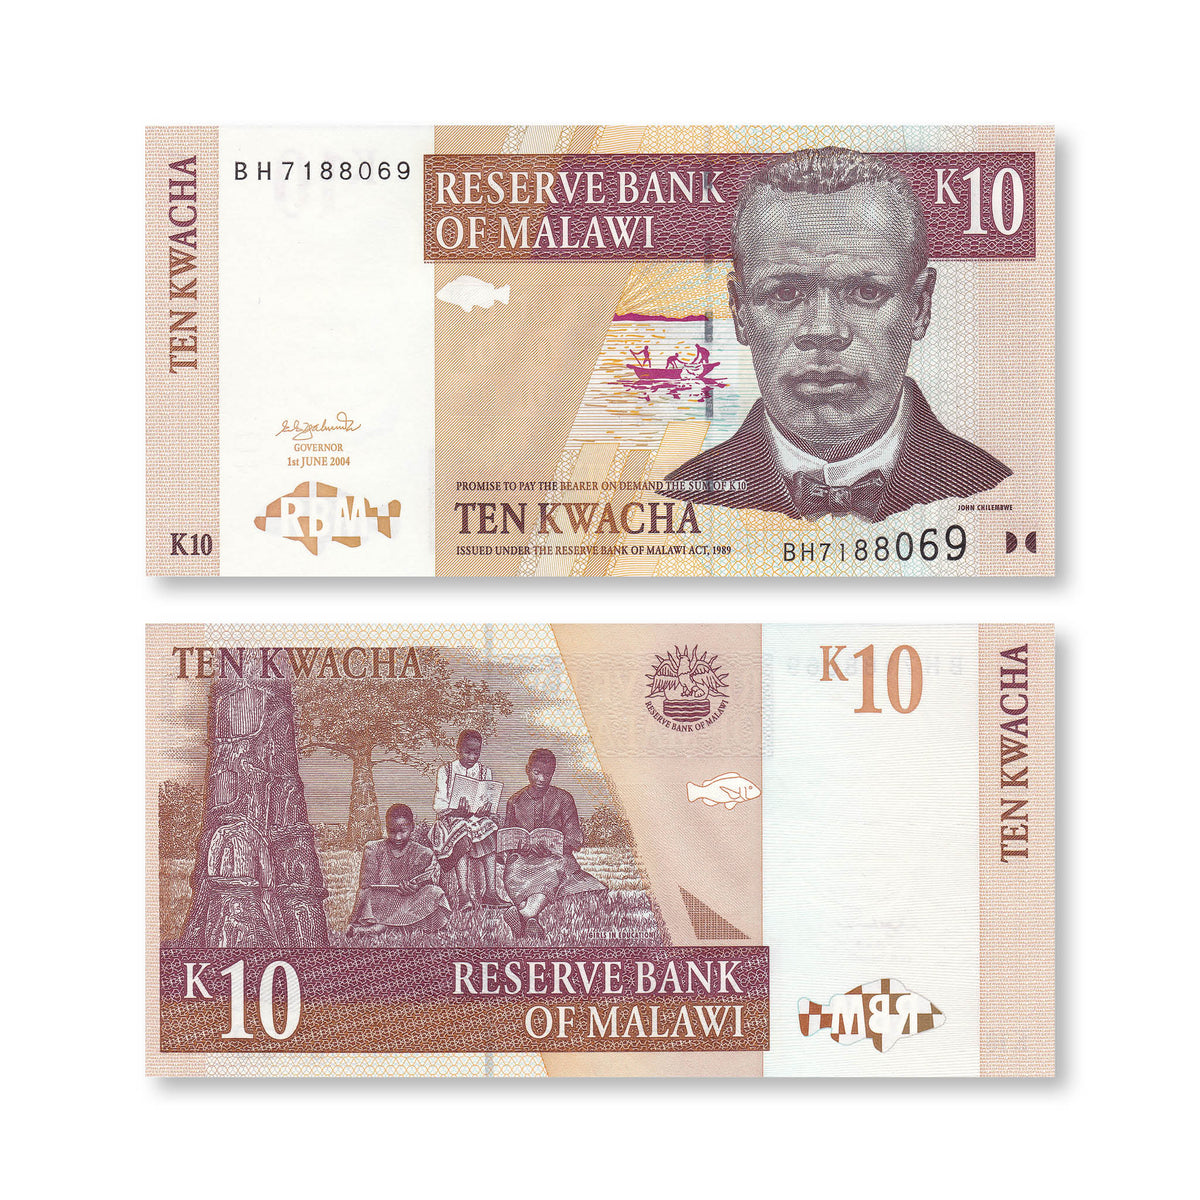 Malawi 10 Kwacha, 2004, B142c, P51, UNC - Robert's World Money - World Banknotes